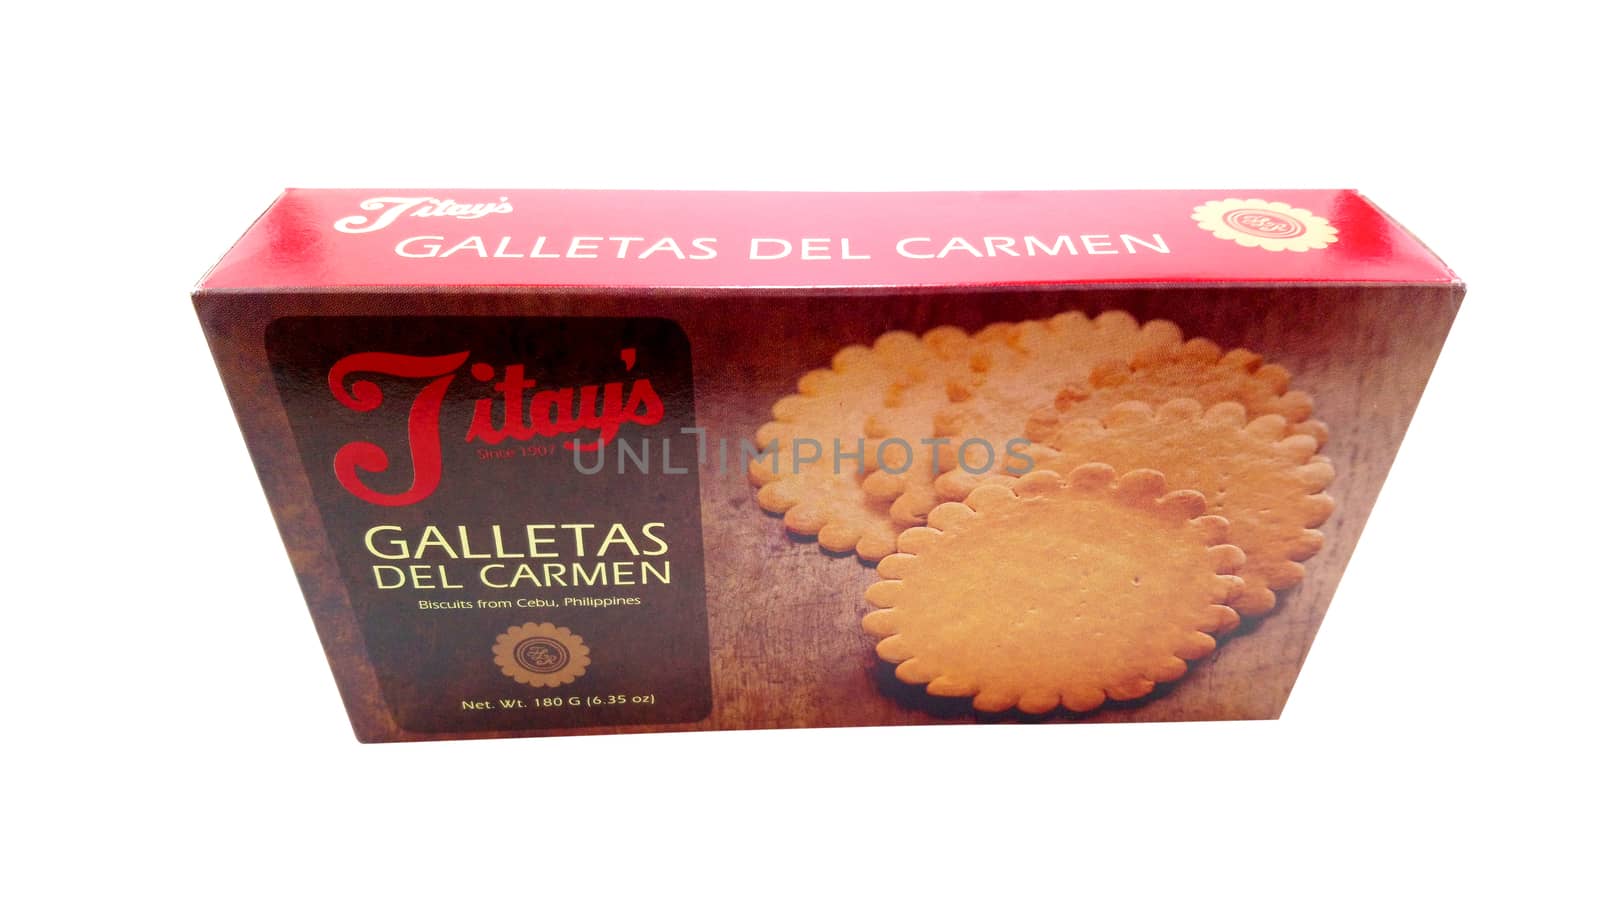 Titays galletas del carmen biscuits in Manila, Philippines by imwaltersy